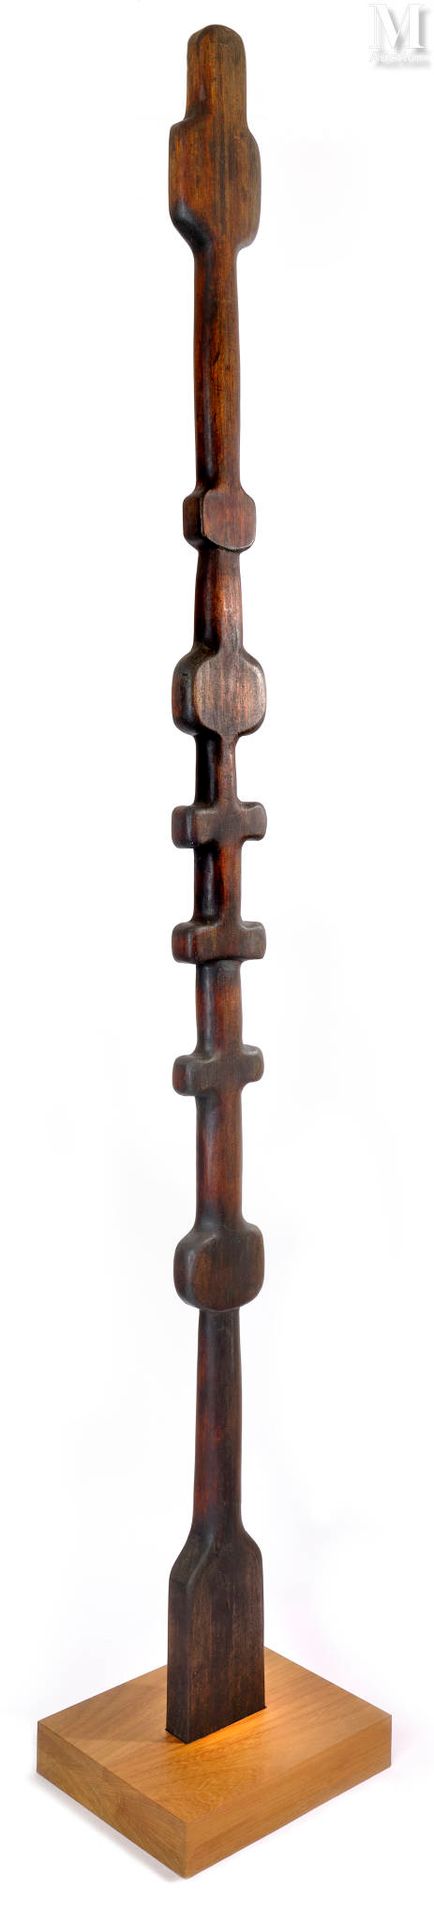 François STAHLY (1911-2006) Untitled

Carved wood
Height: 248 cm (including base&hellip;